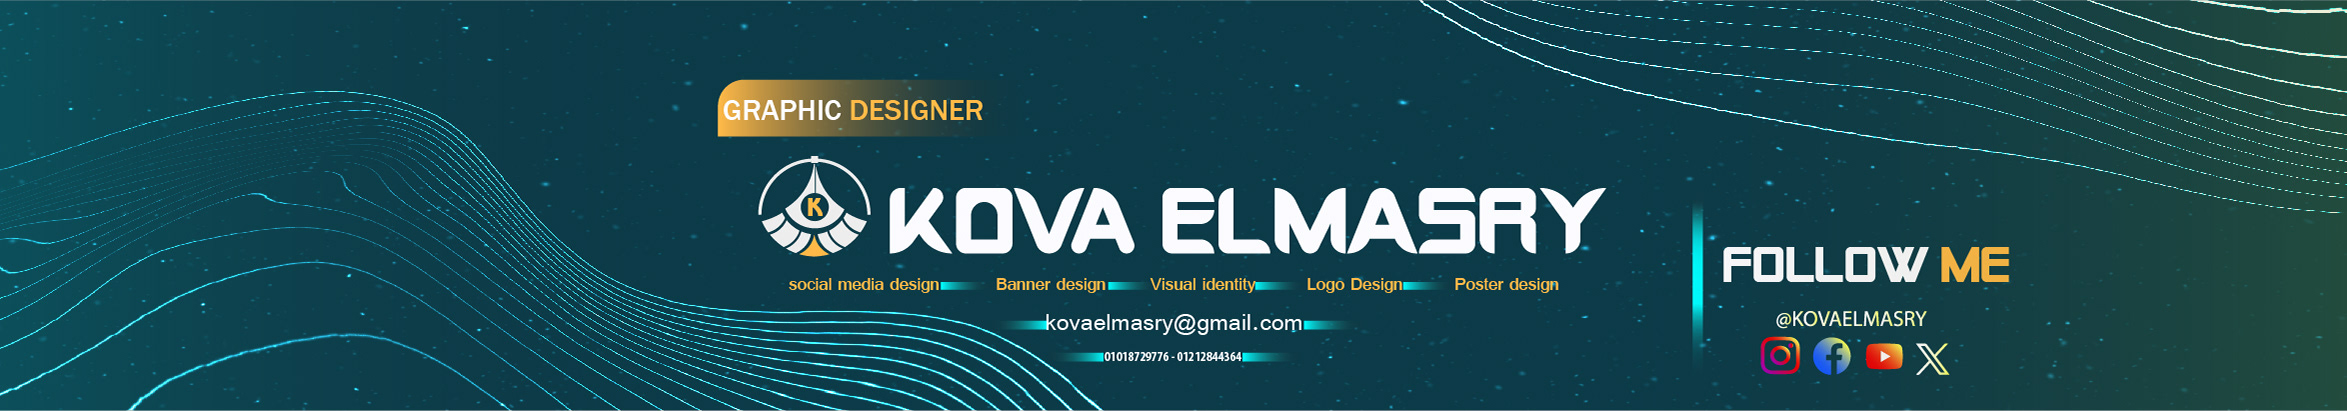 Kova elmasry's profile banner